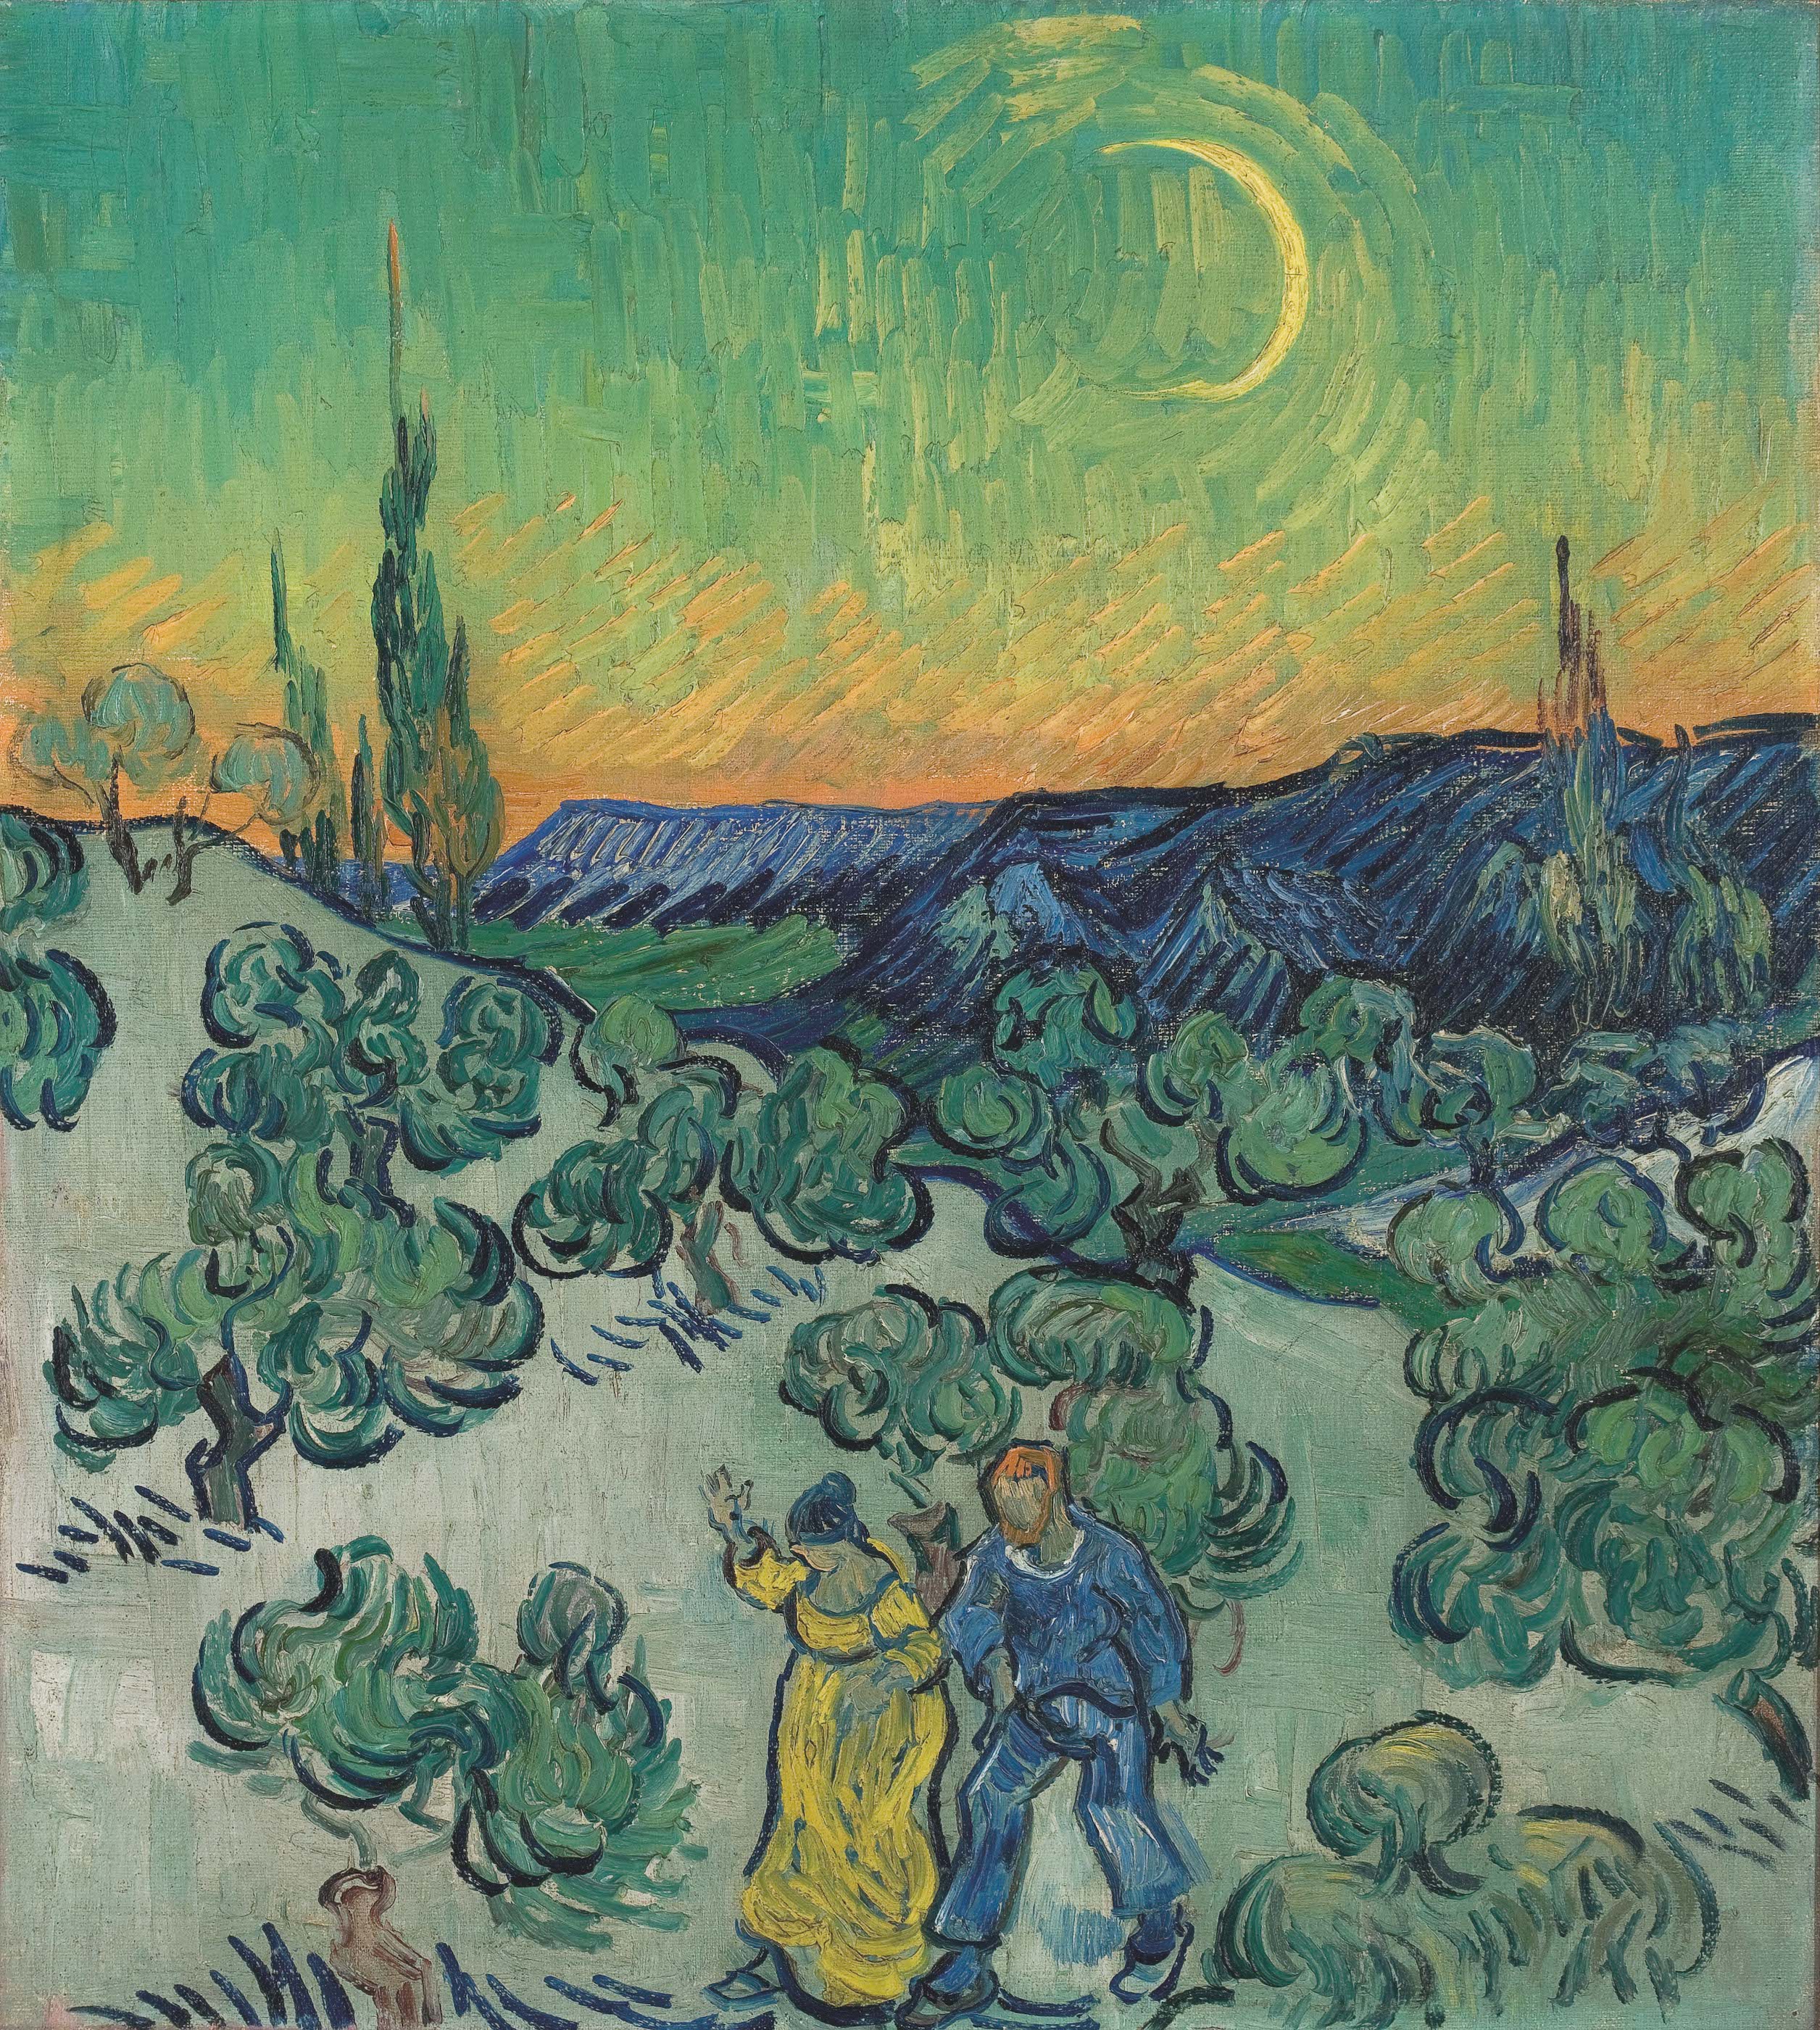 A Walk at Twilight by Vincent van Gogh - 1889-1890 - 52 x 47 cm Museu de Arte de São Paulo